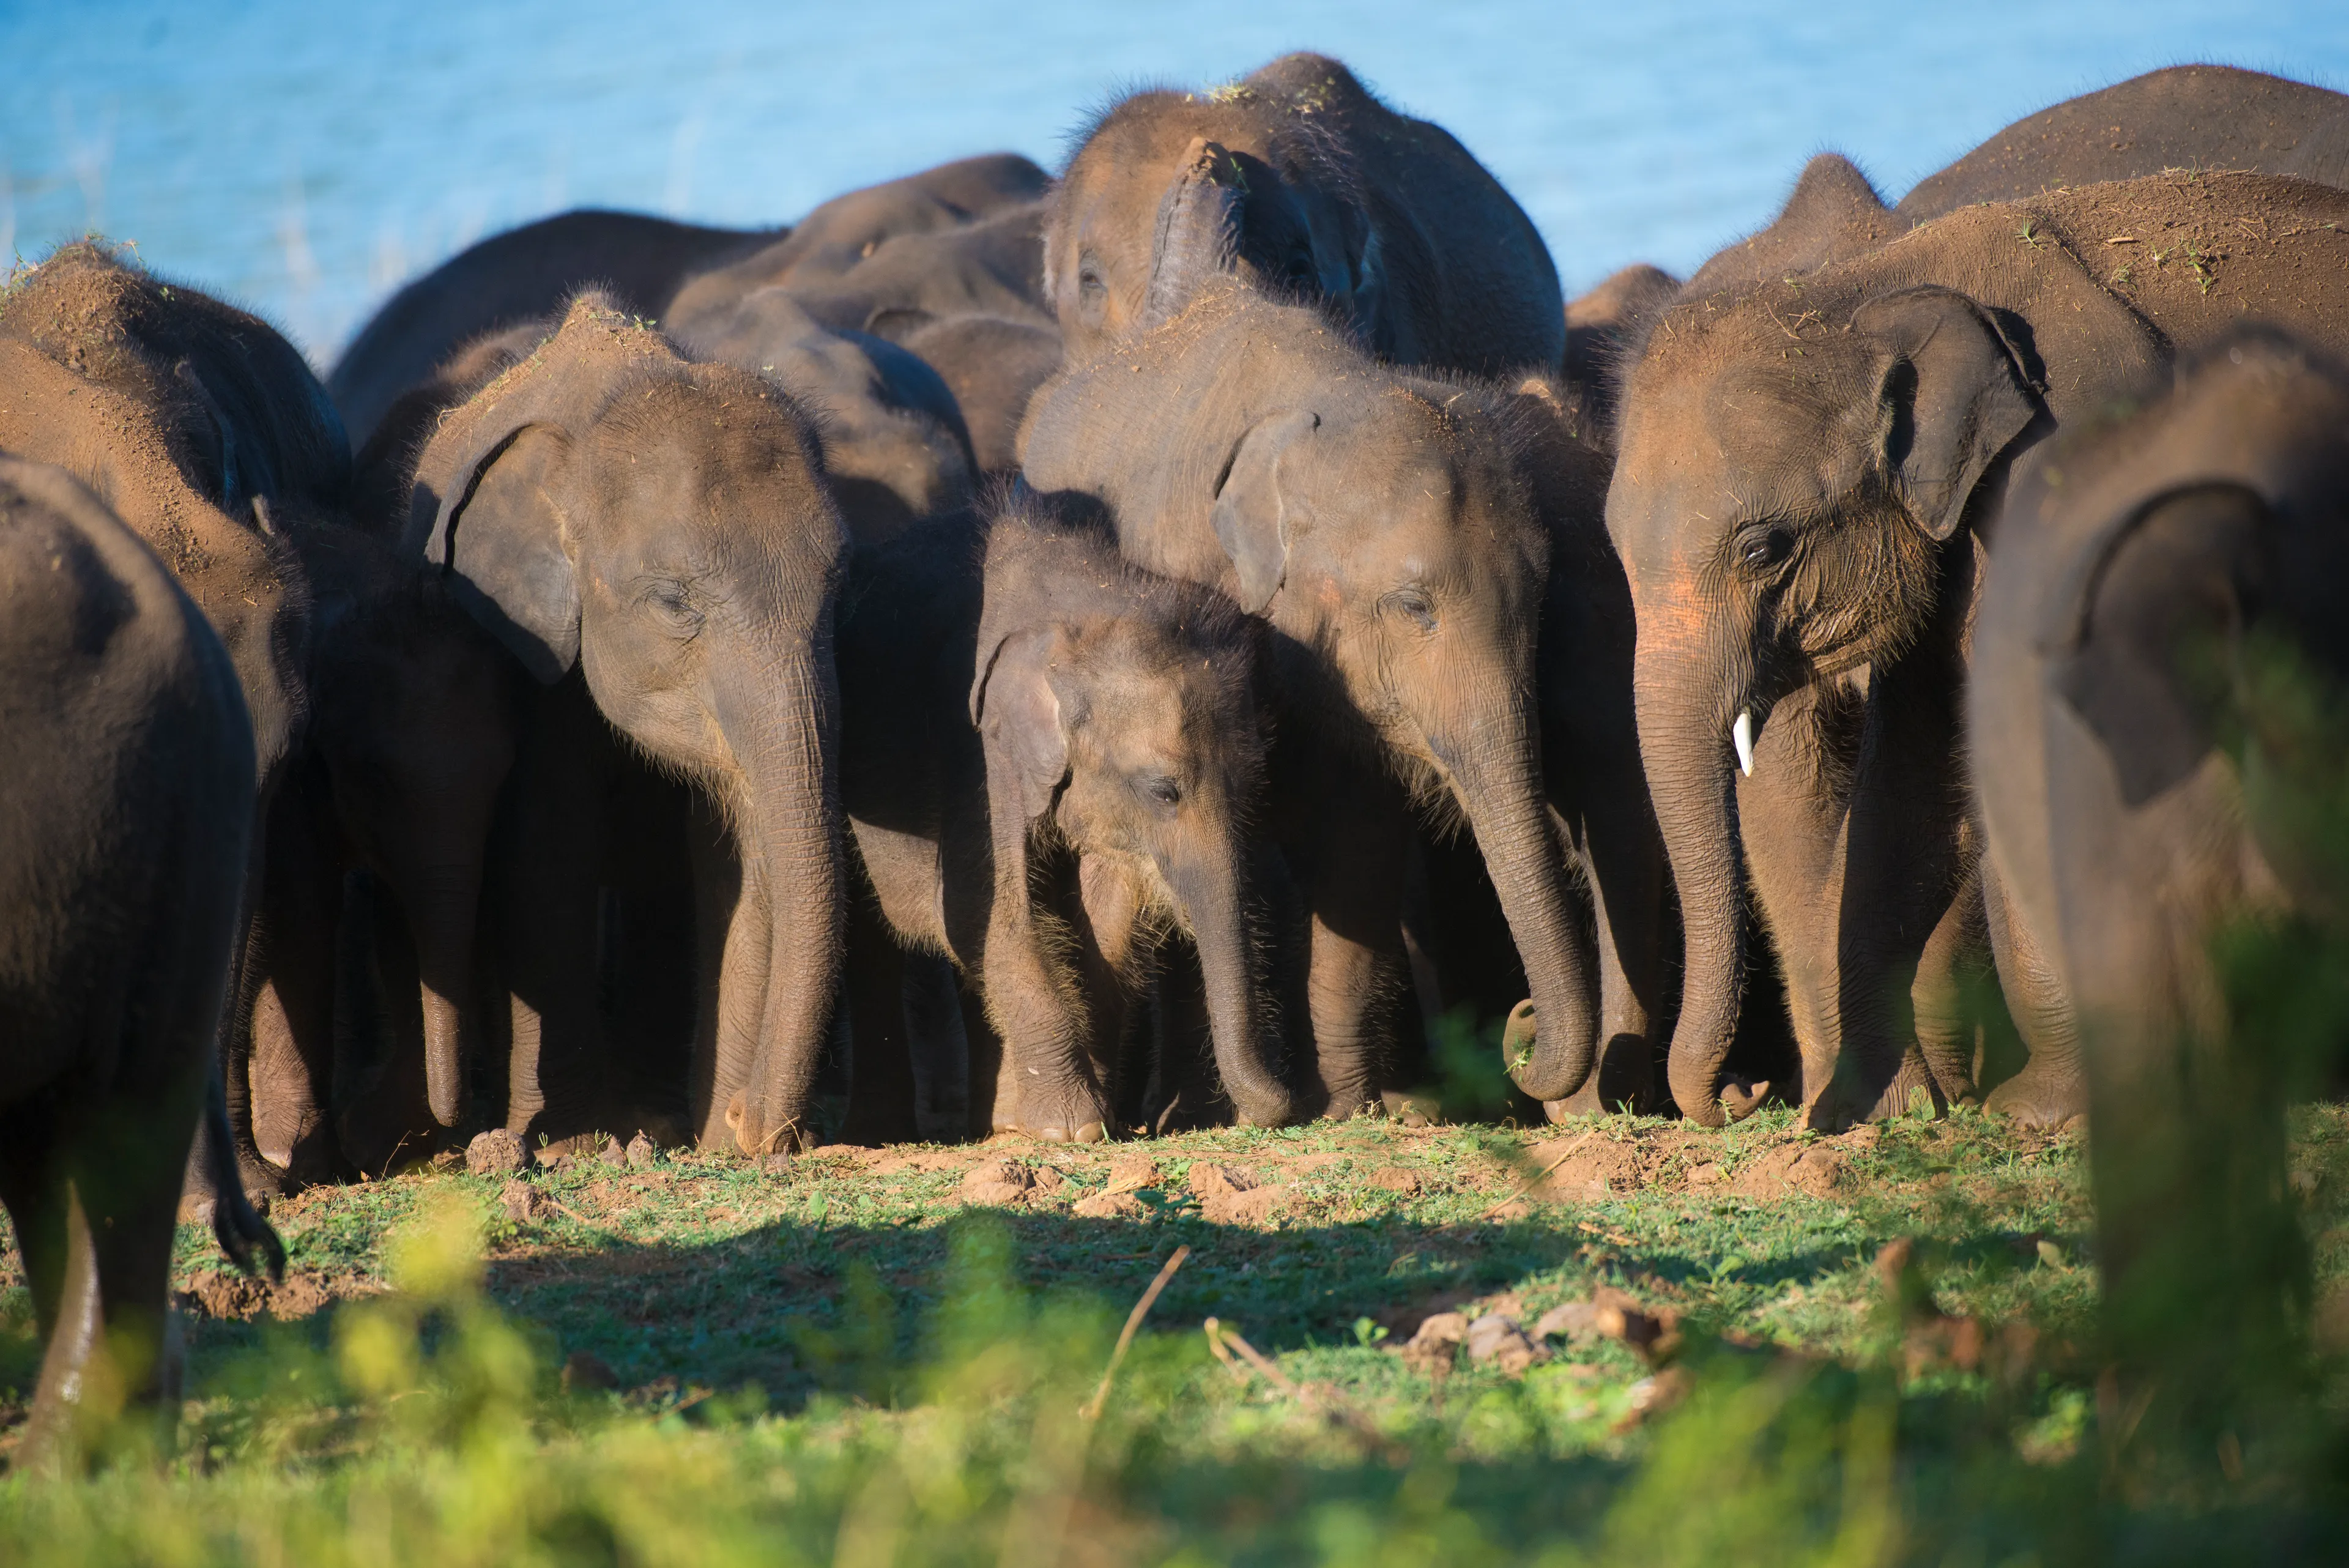 Group of elephants in Uda Walawe National Park